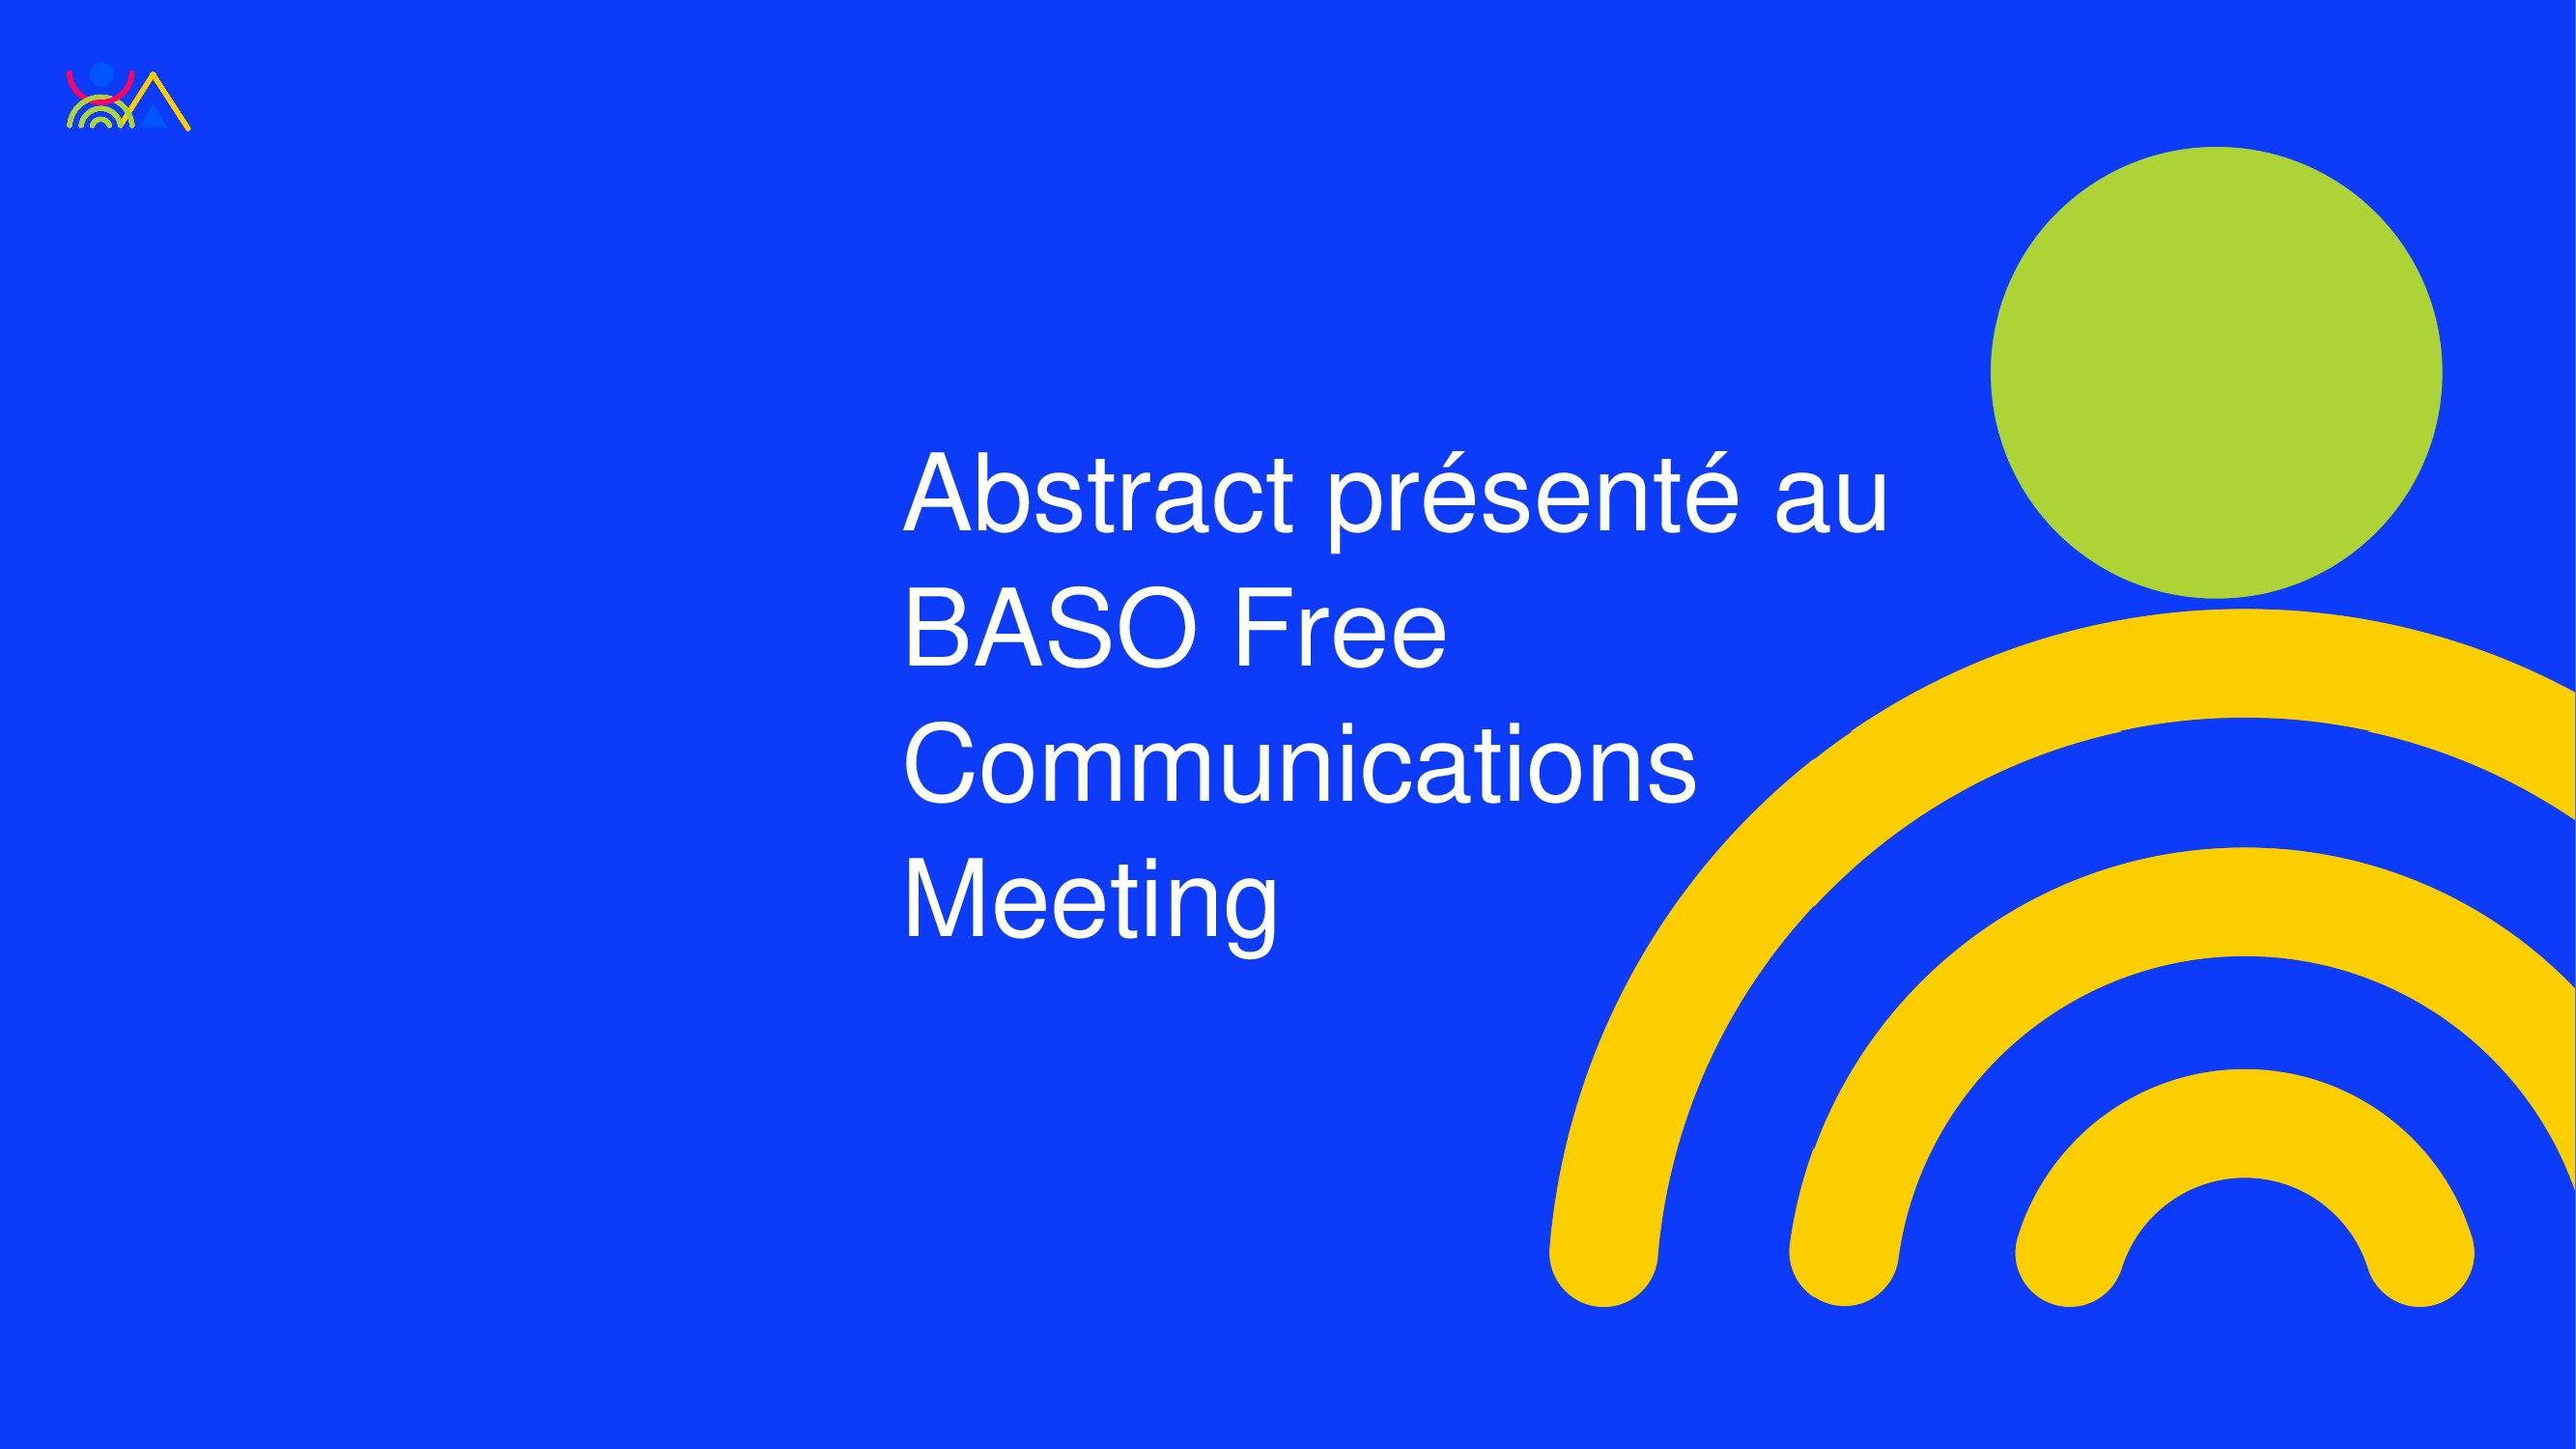 Abstract : BASO Free Communications Meeting